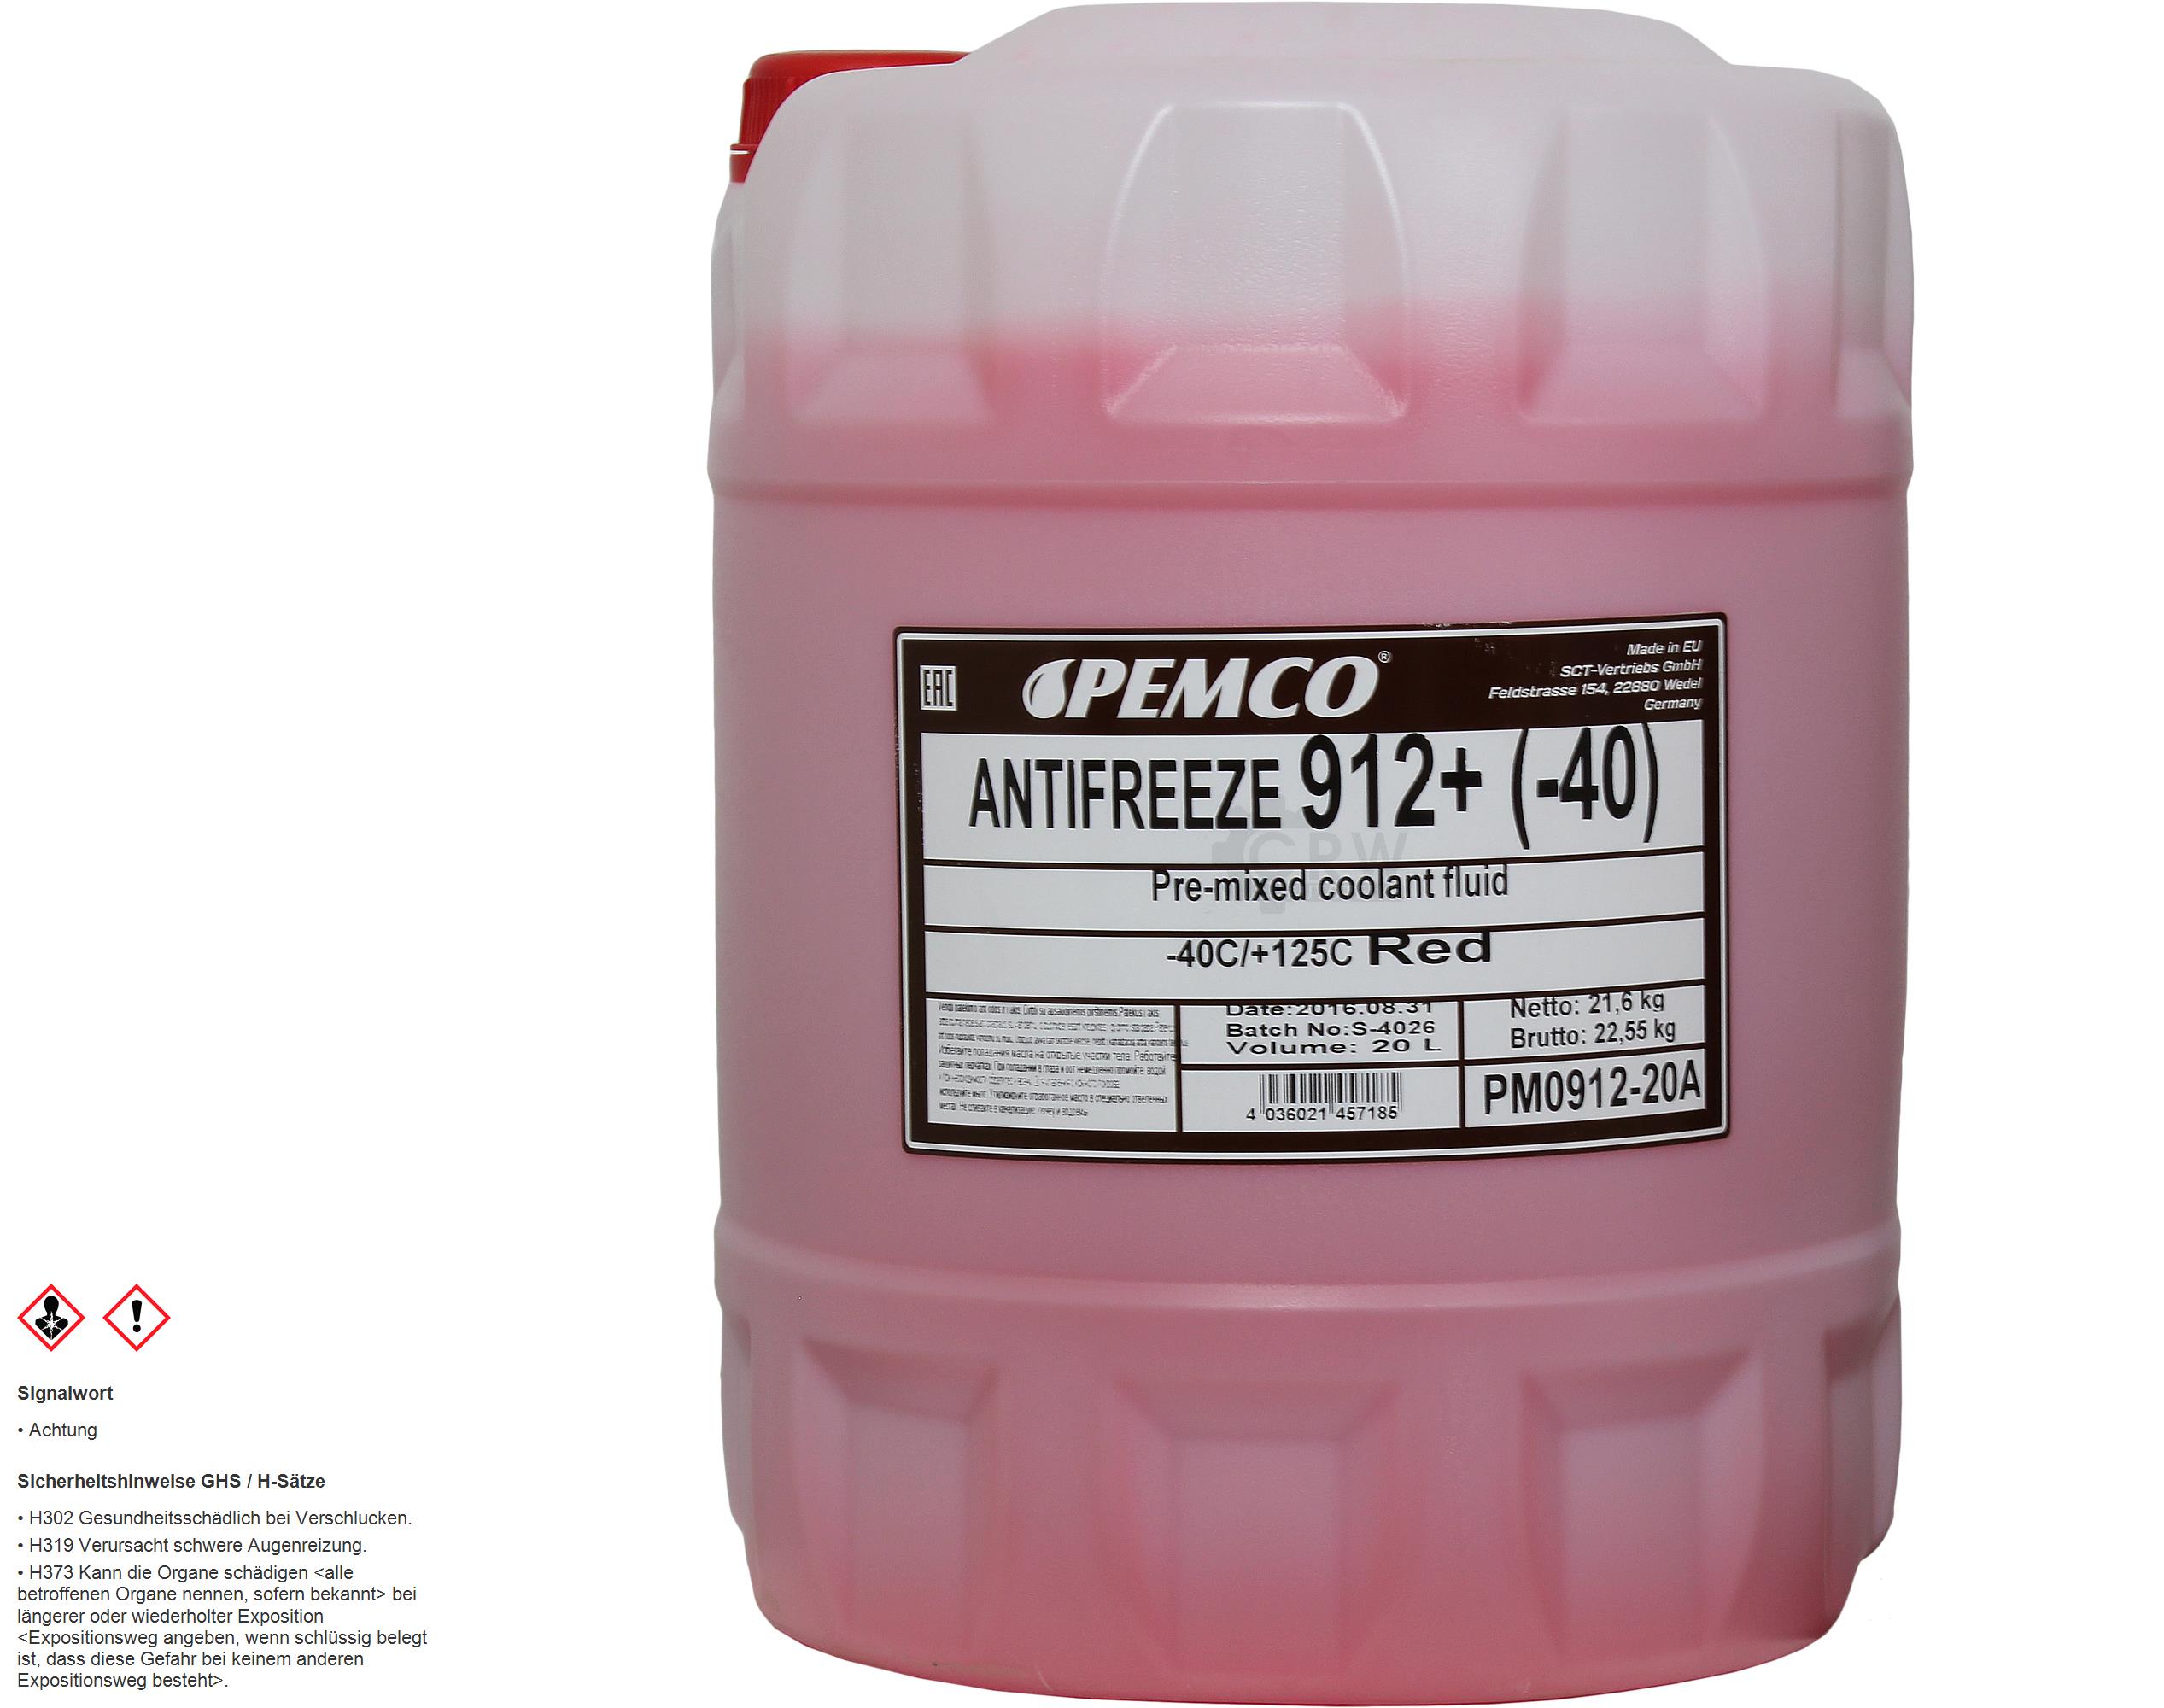 20 Liter PEMCO Kühlerfrostschutz Antifreeze 912+ (-40) ROT ROSA